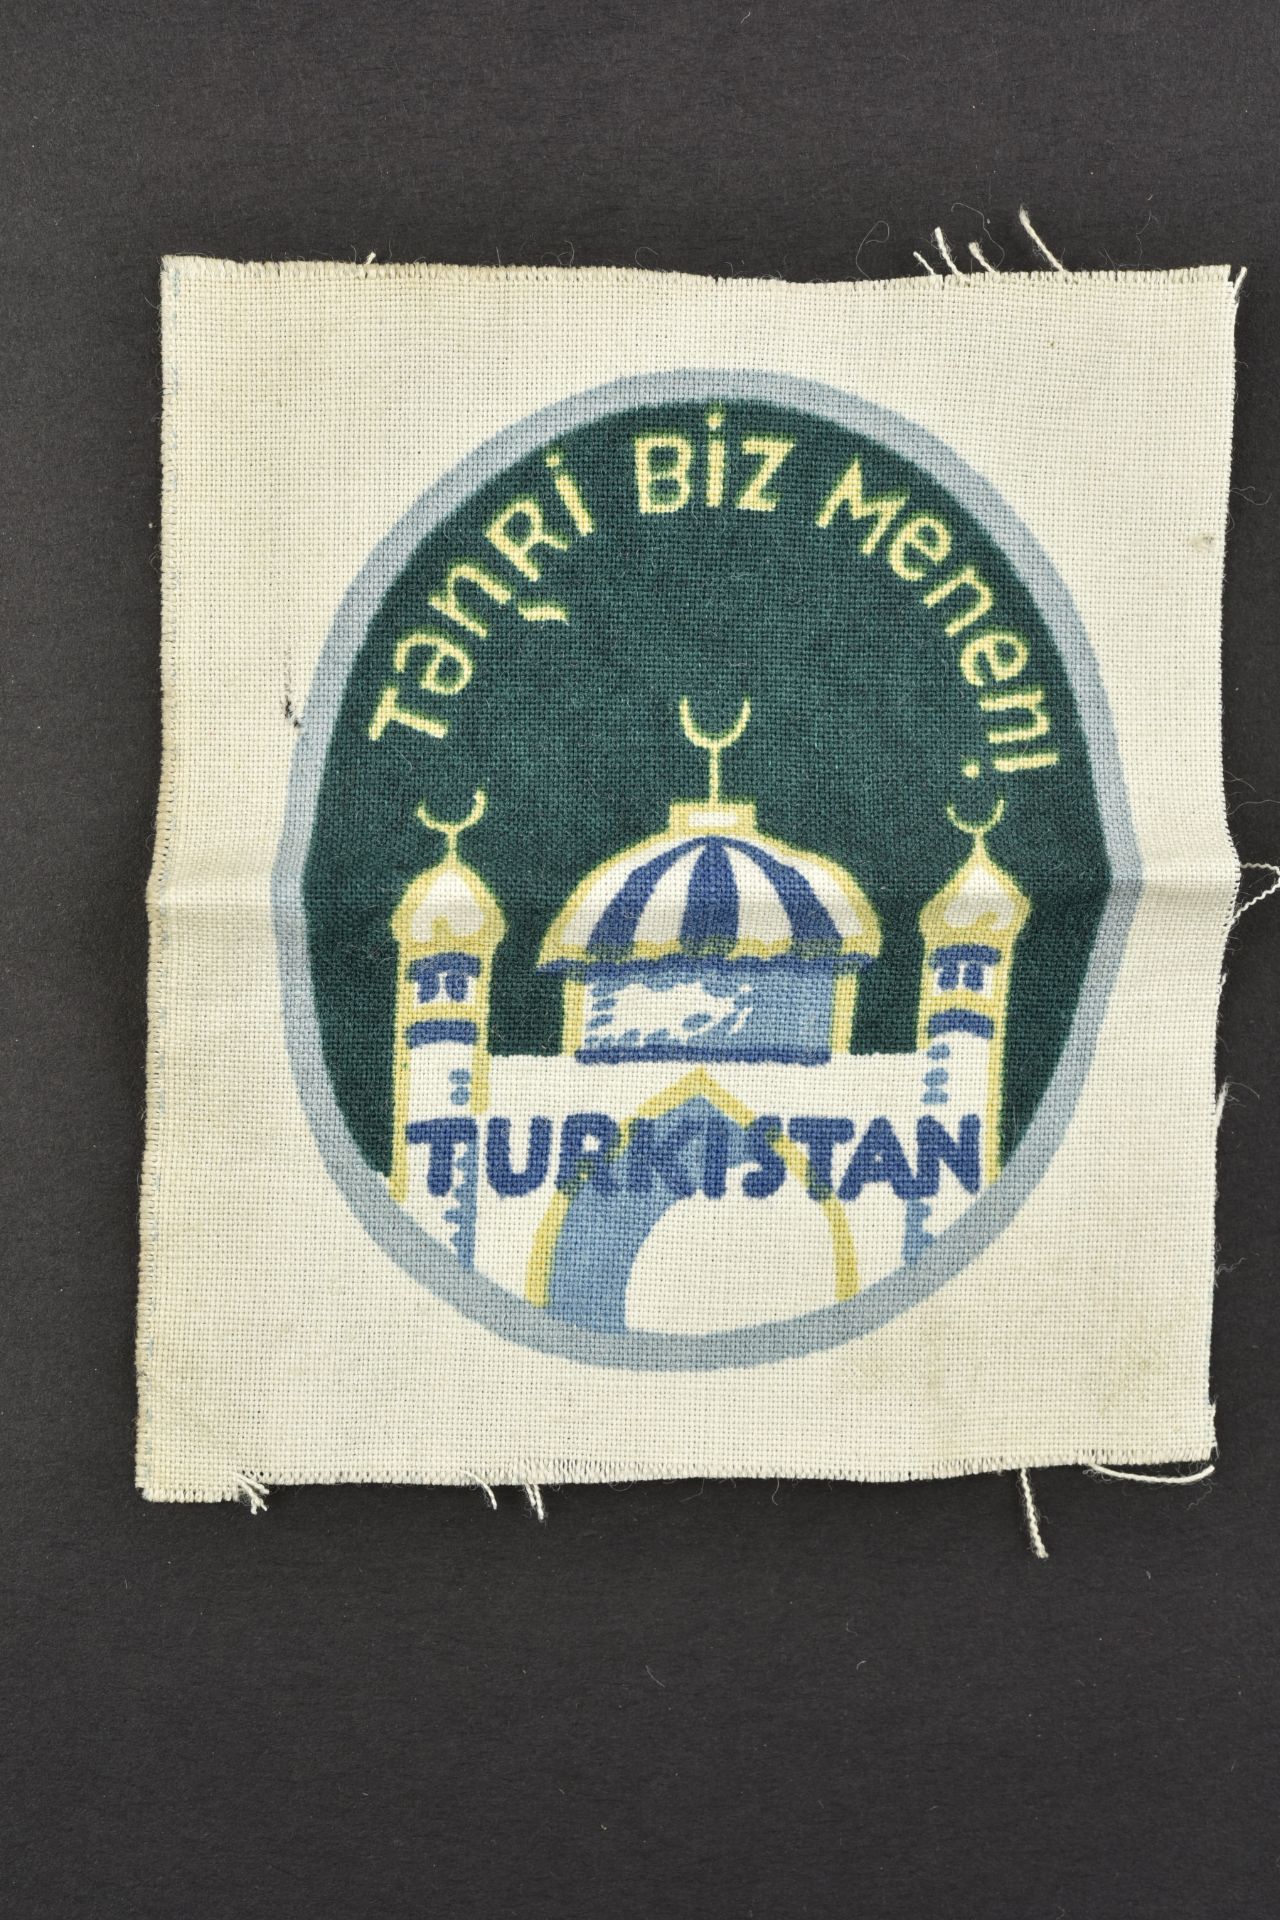 Insigne Turkistan. Turkistan insignia.